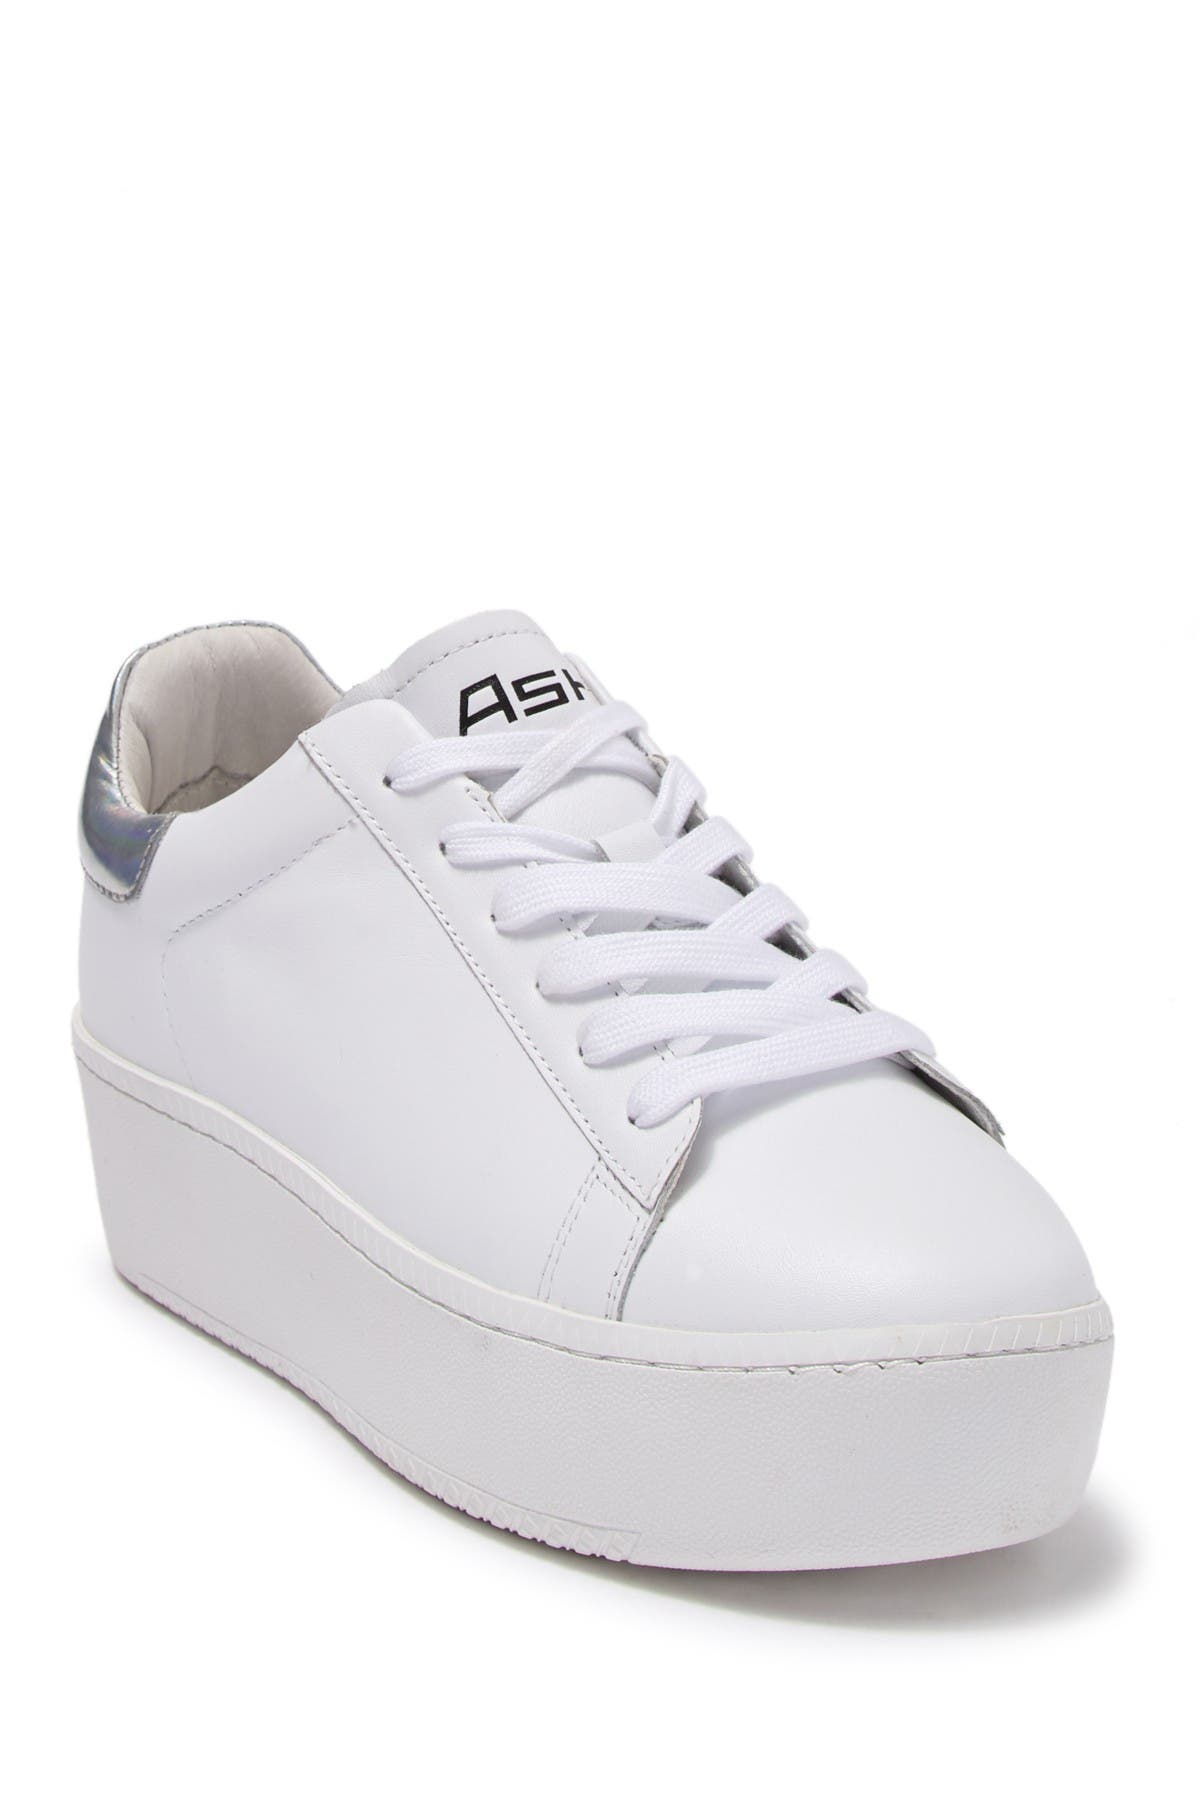 ash white platform sneakers